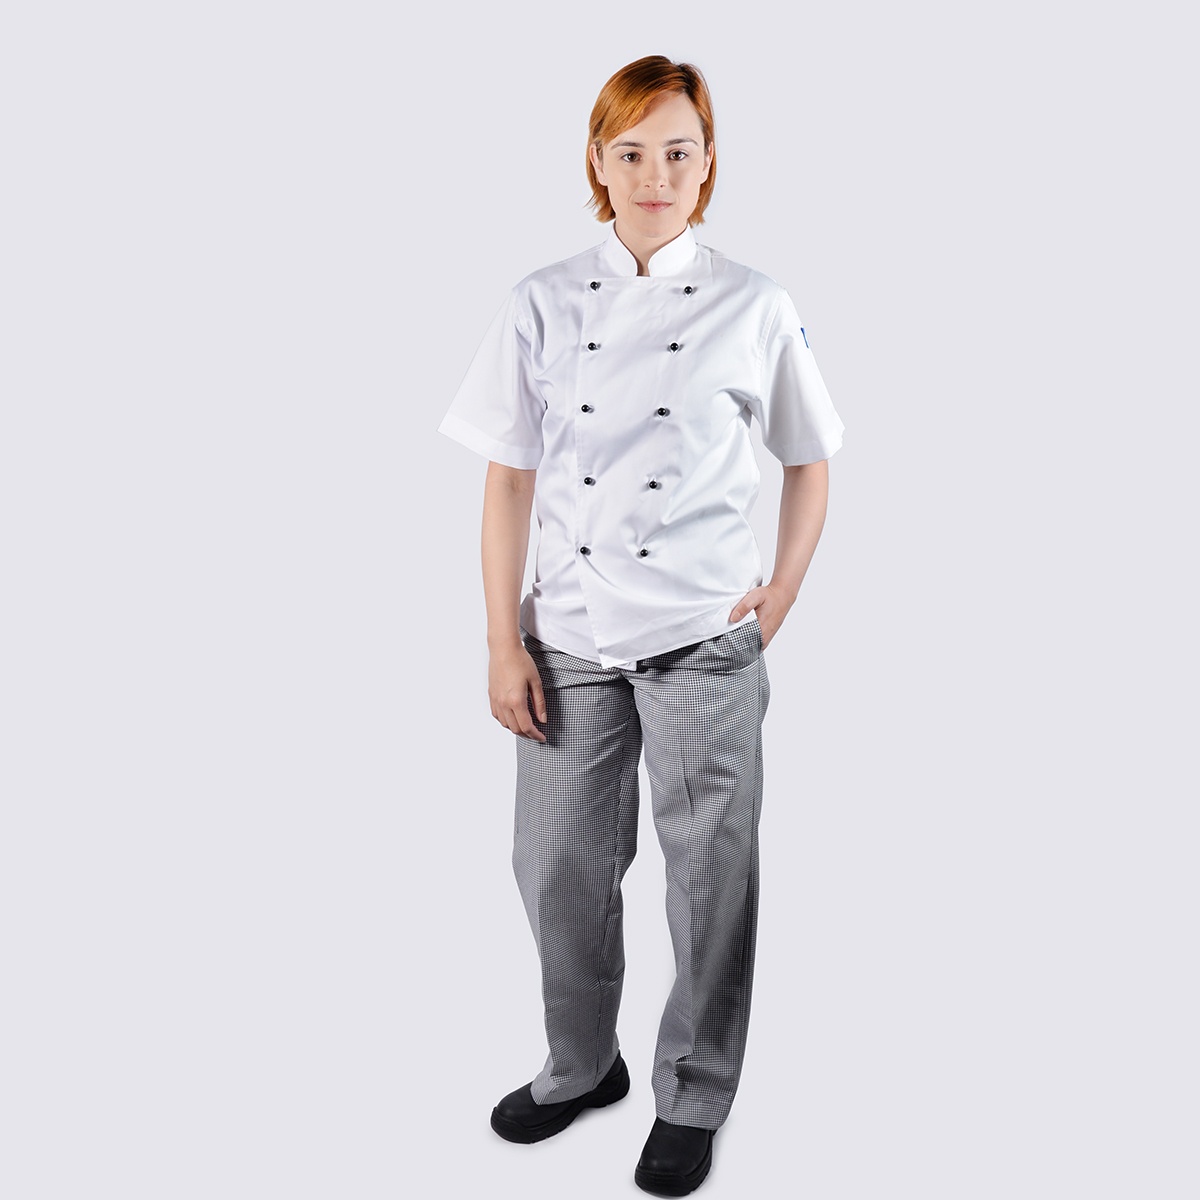 Chef Jacket White Short Sleeve and Checkered Pant Set